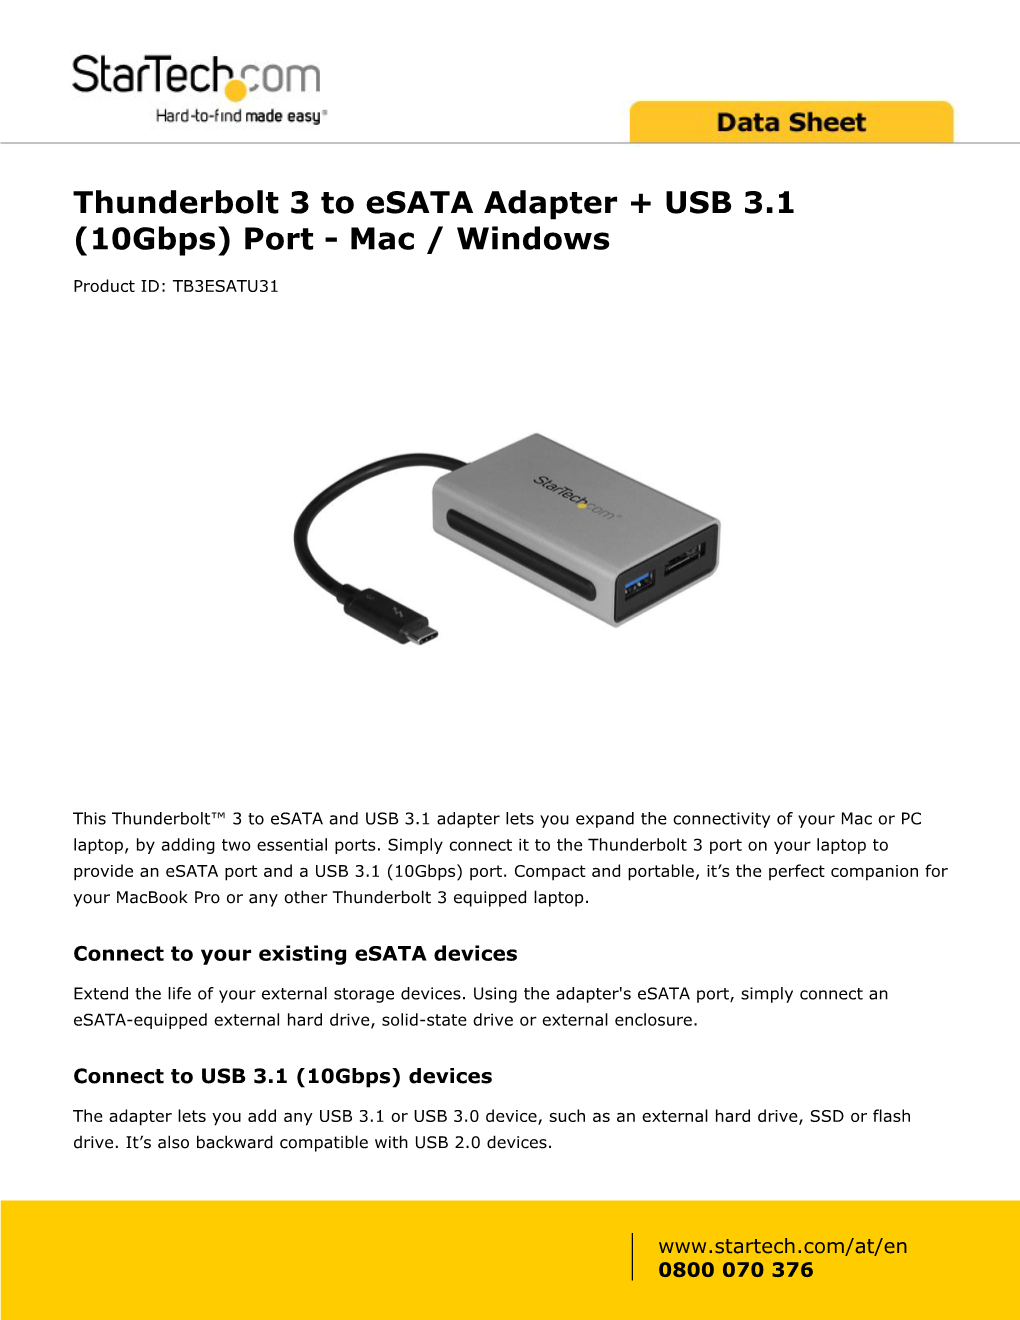 Thunderbolt 3 to Esata Adapter + USB 3.1 (10Gbps) Port - Mac / Windows